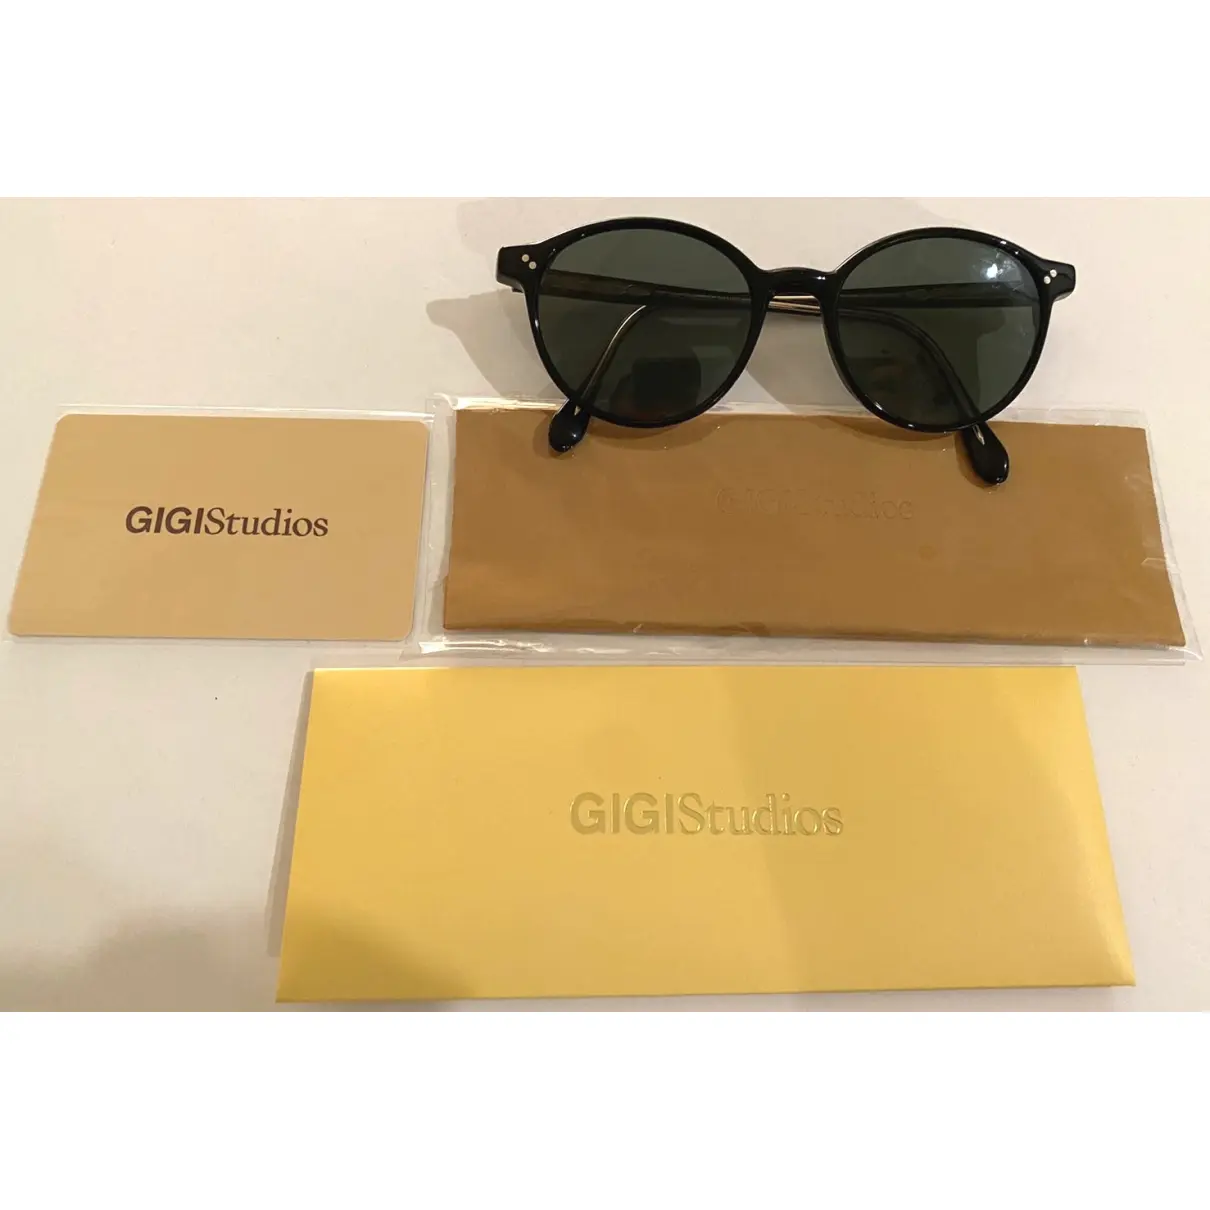 Buy Gigi Studios Sunglasses online